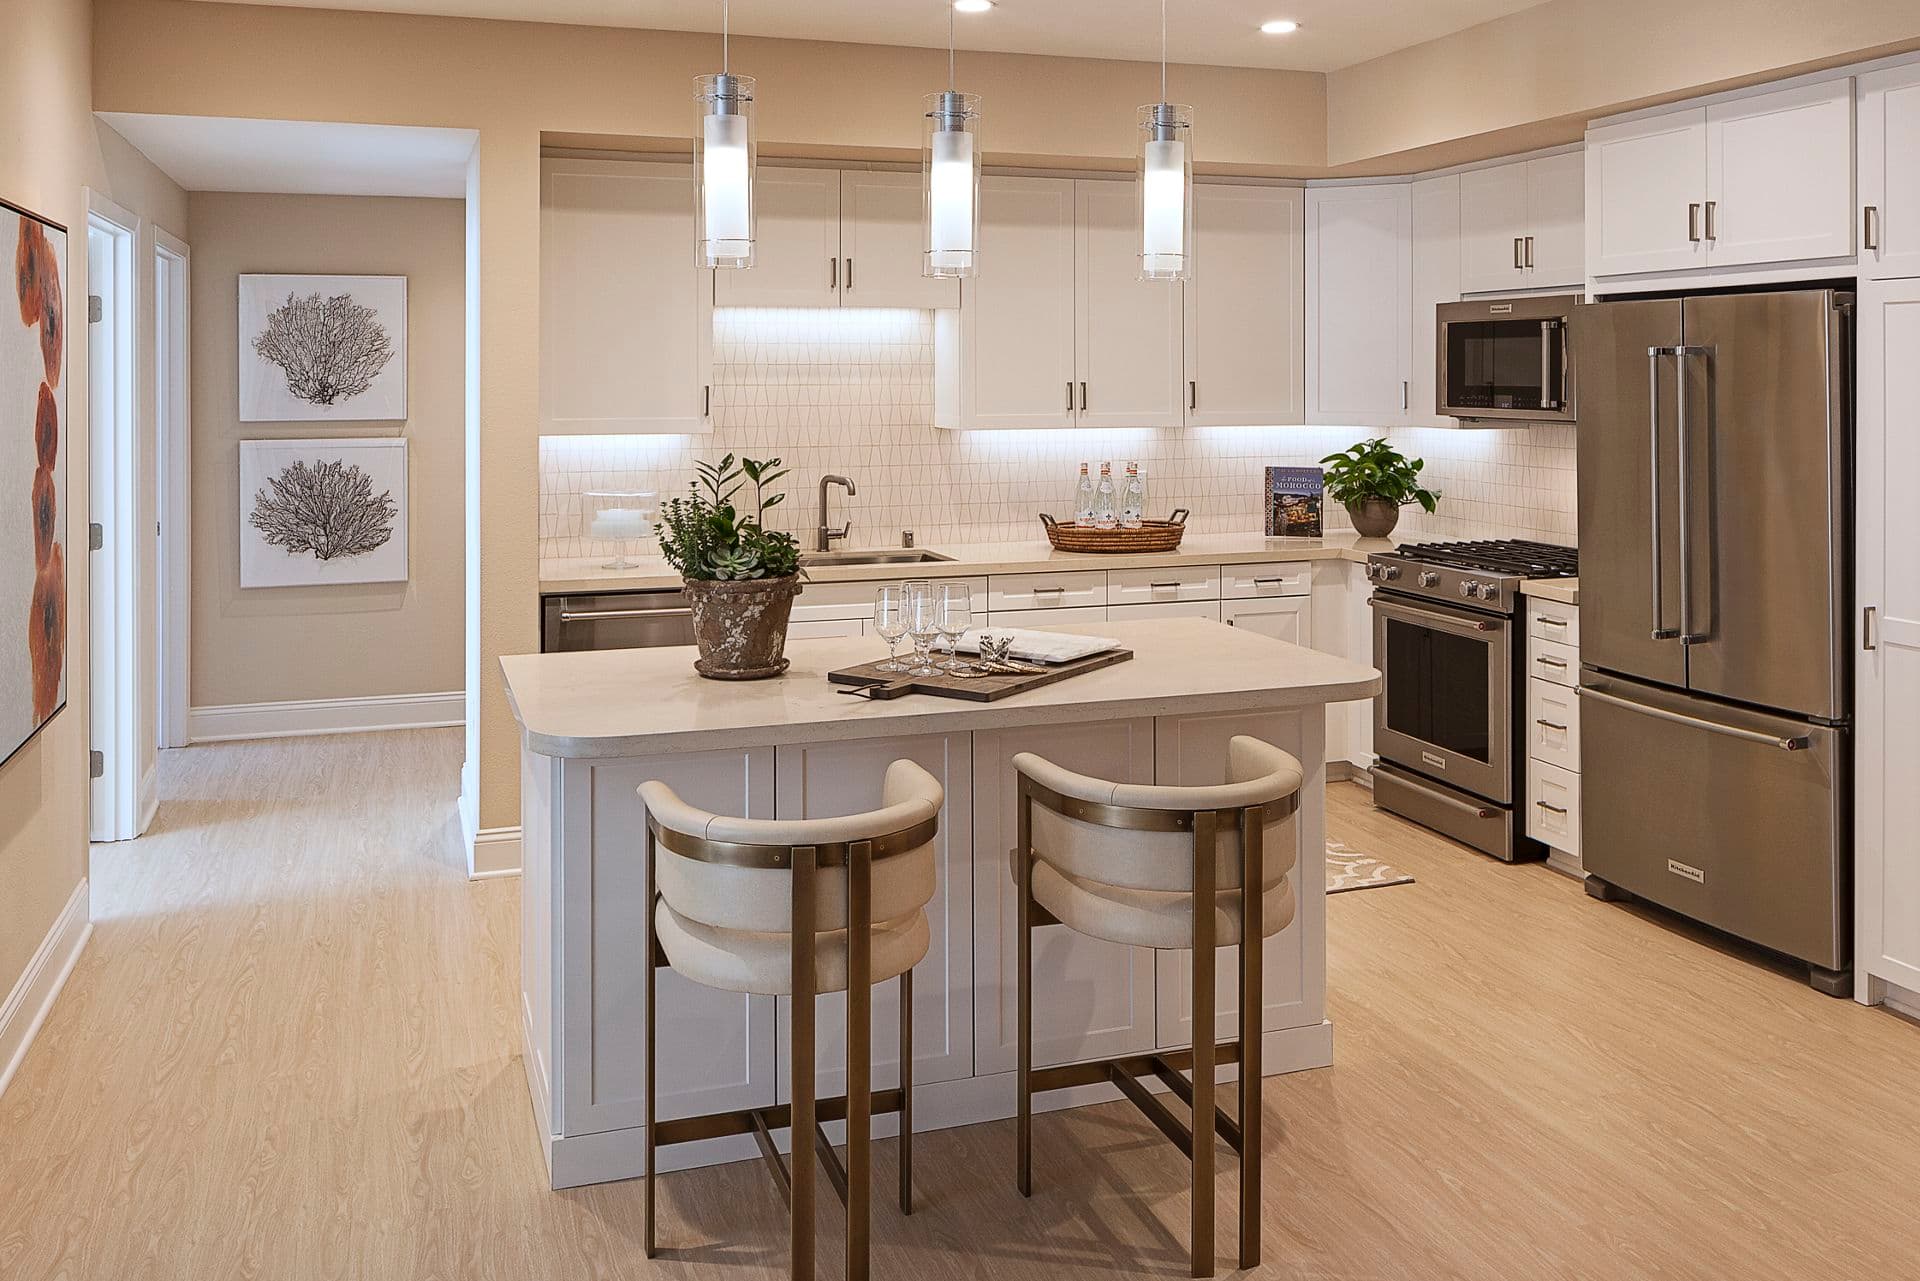 interior view of kitchen at Villas Fashion Island Apartment Homes in Newport Beach, CA.